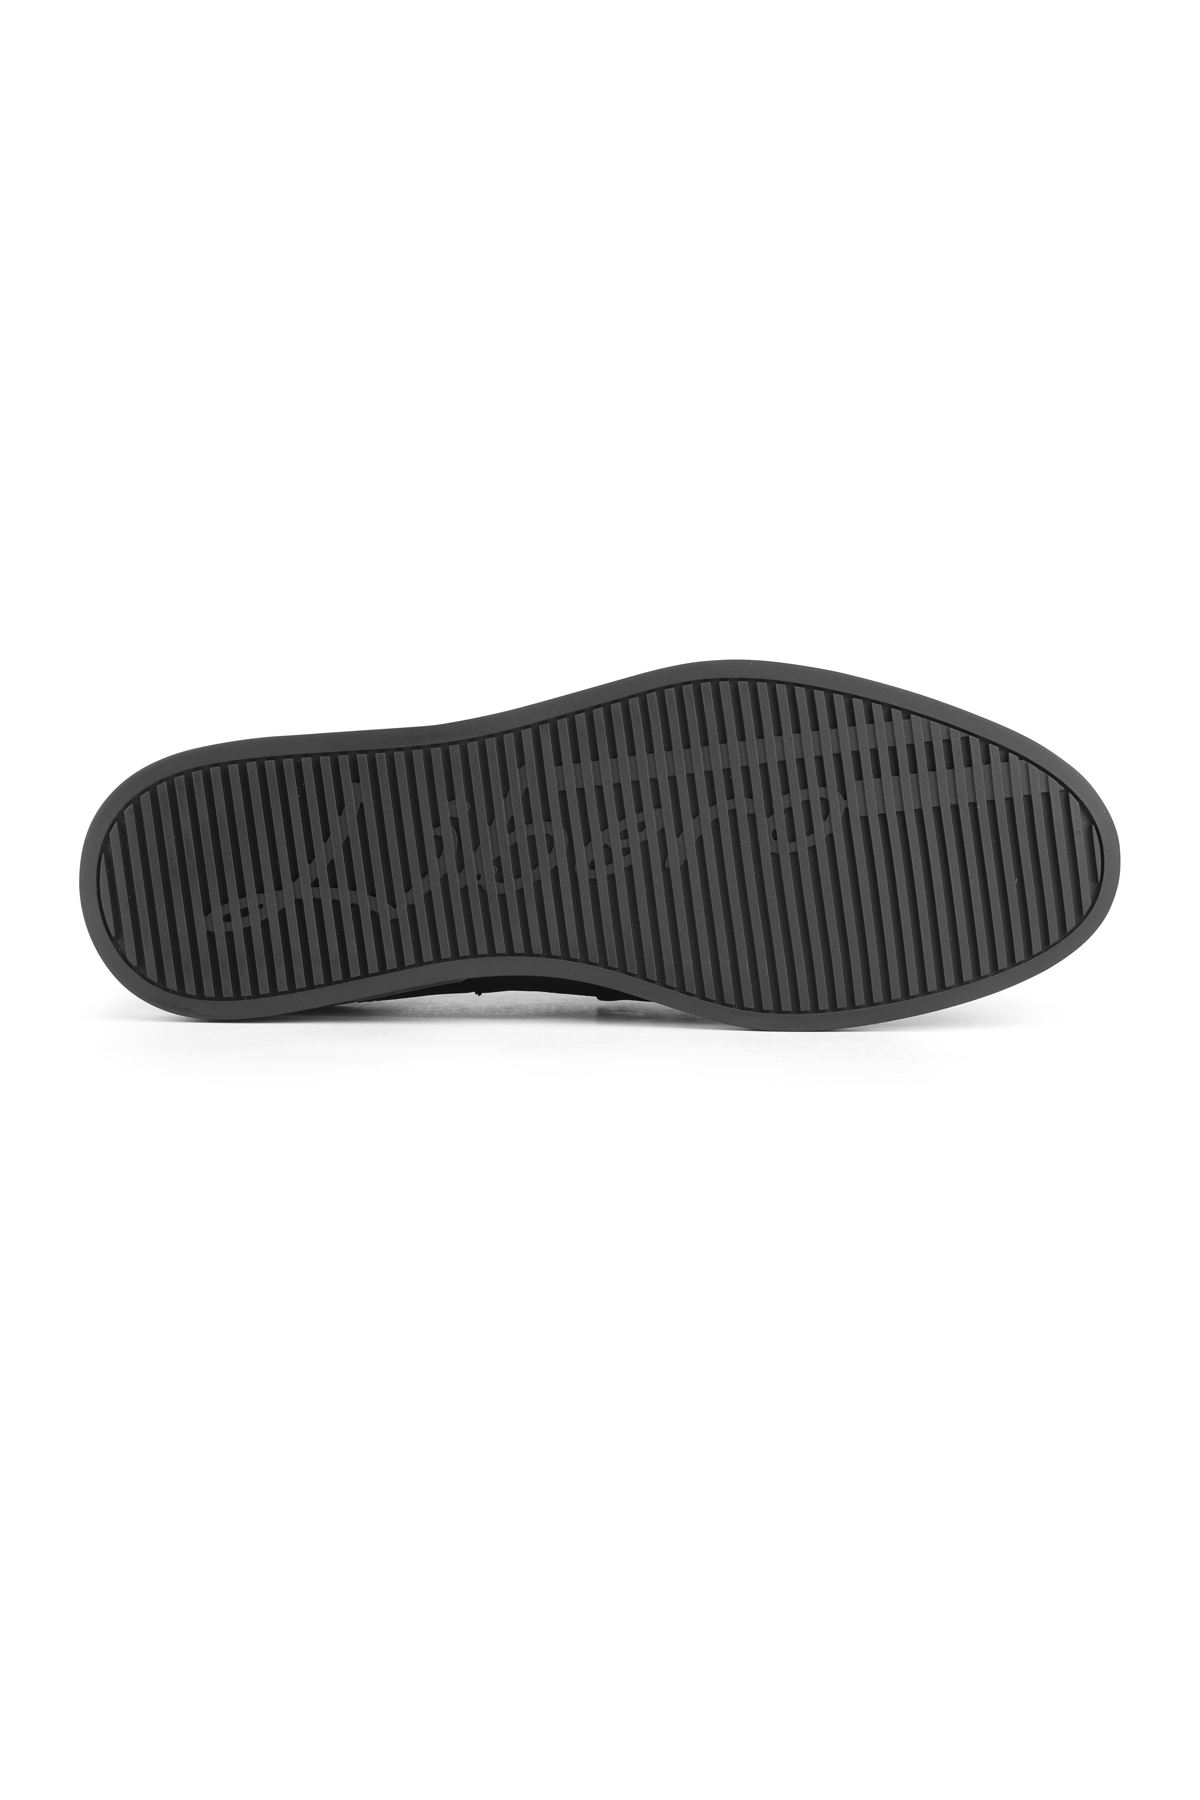 Libero 3368 Black Loafer Shoes